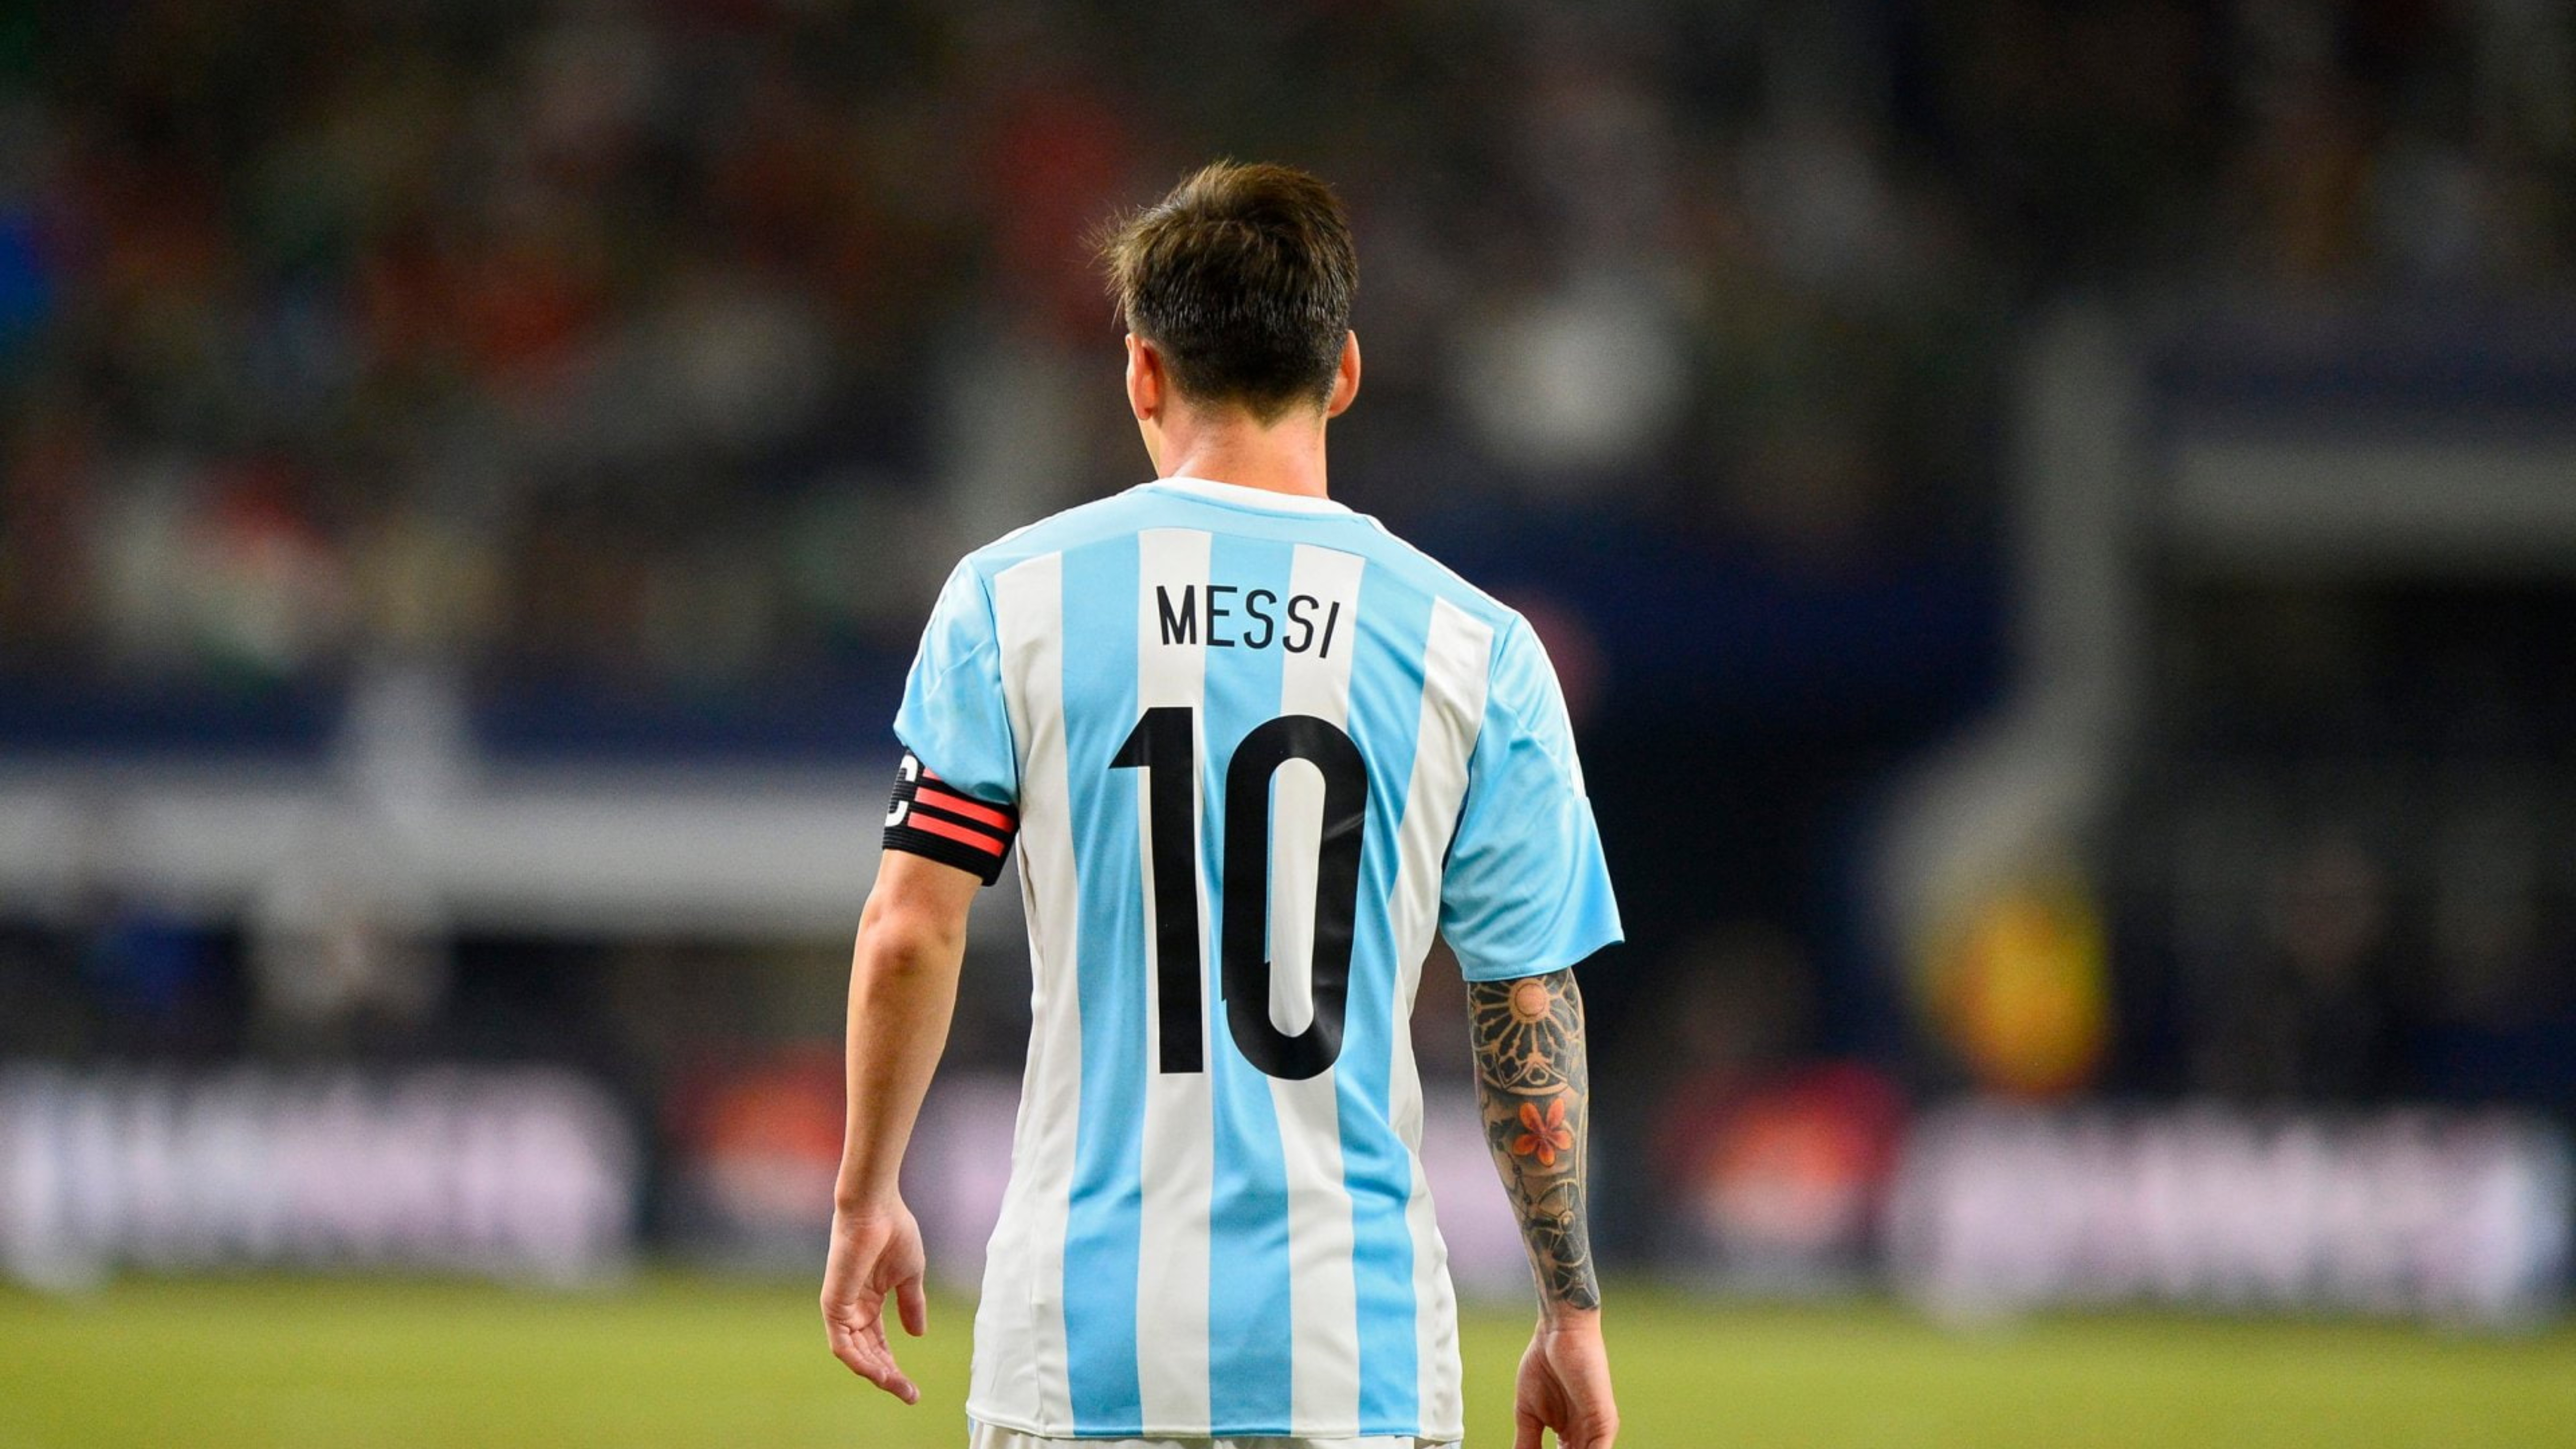 Fondo de pantalla de Messi con Argentina de Fútbol, Messi - Todo fondos